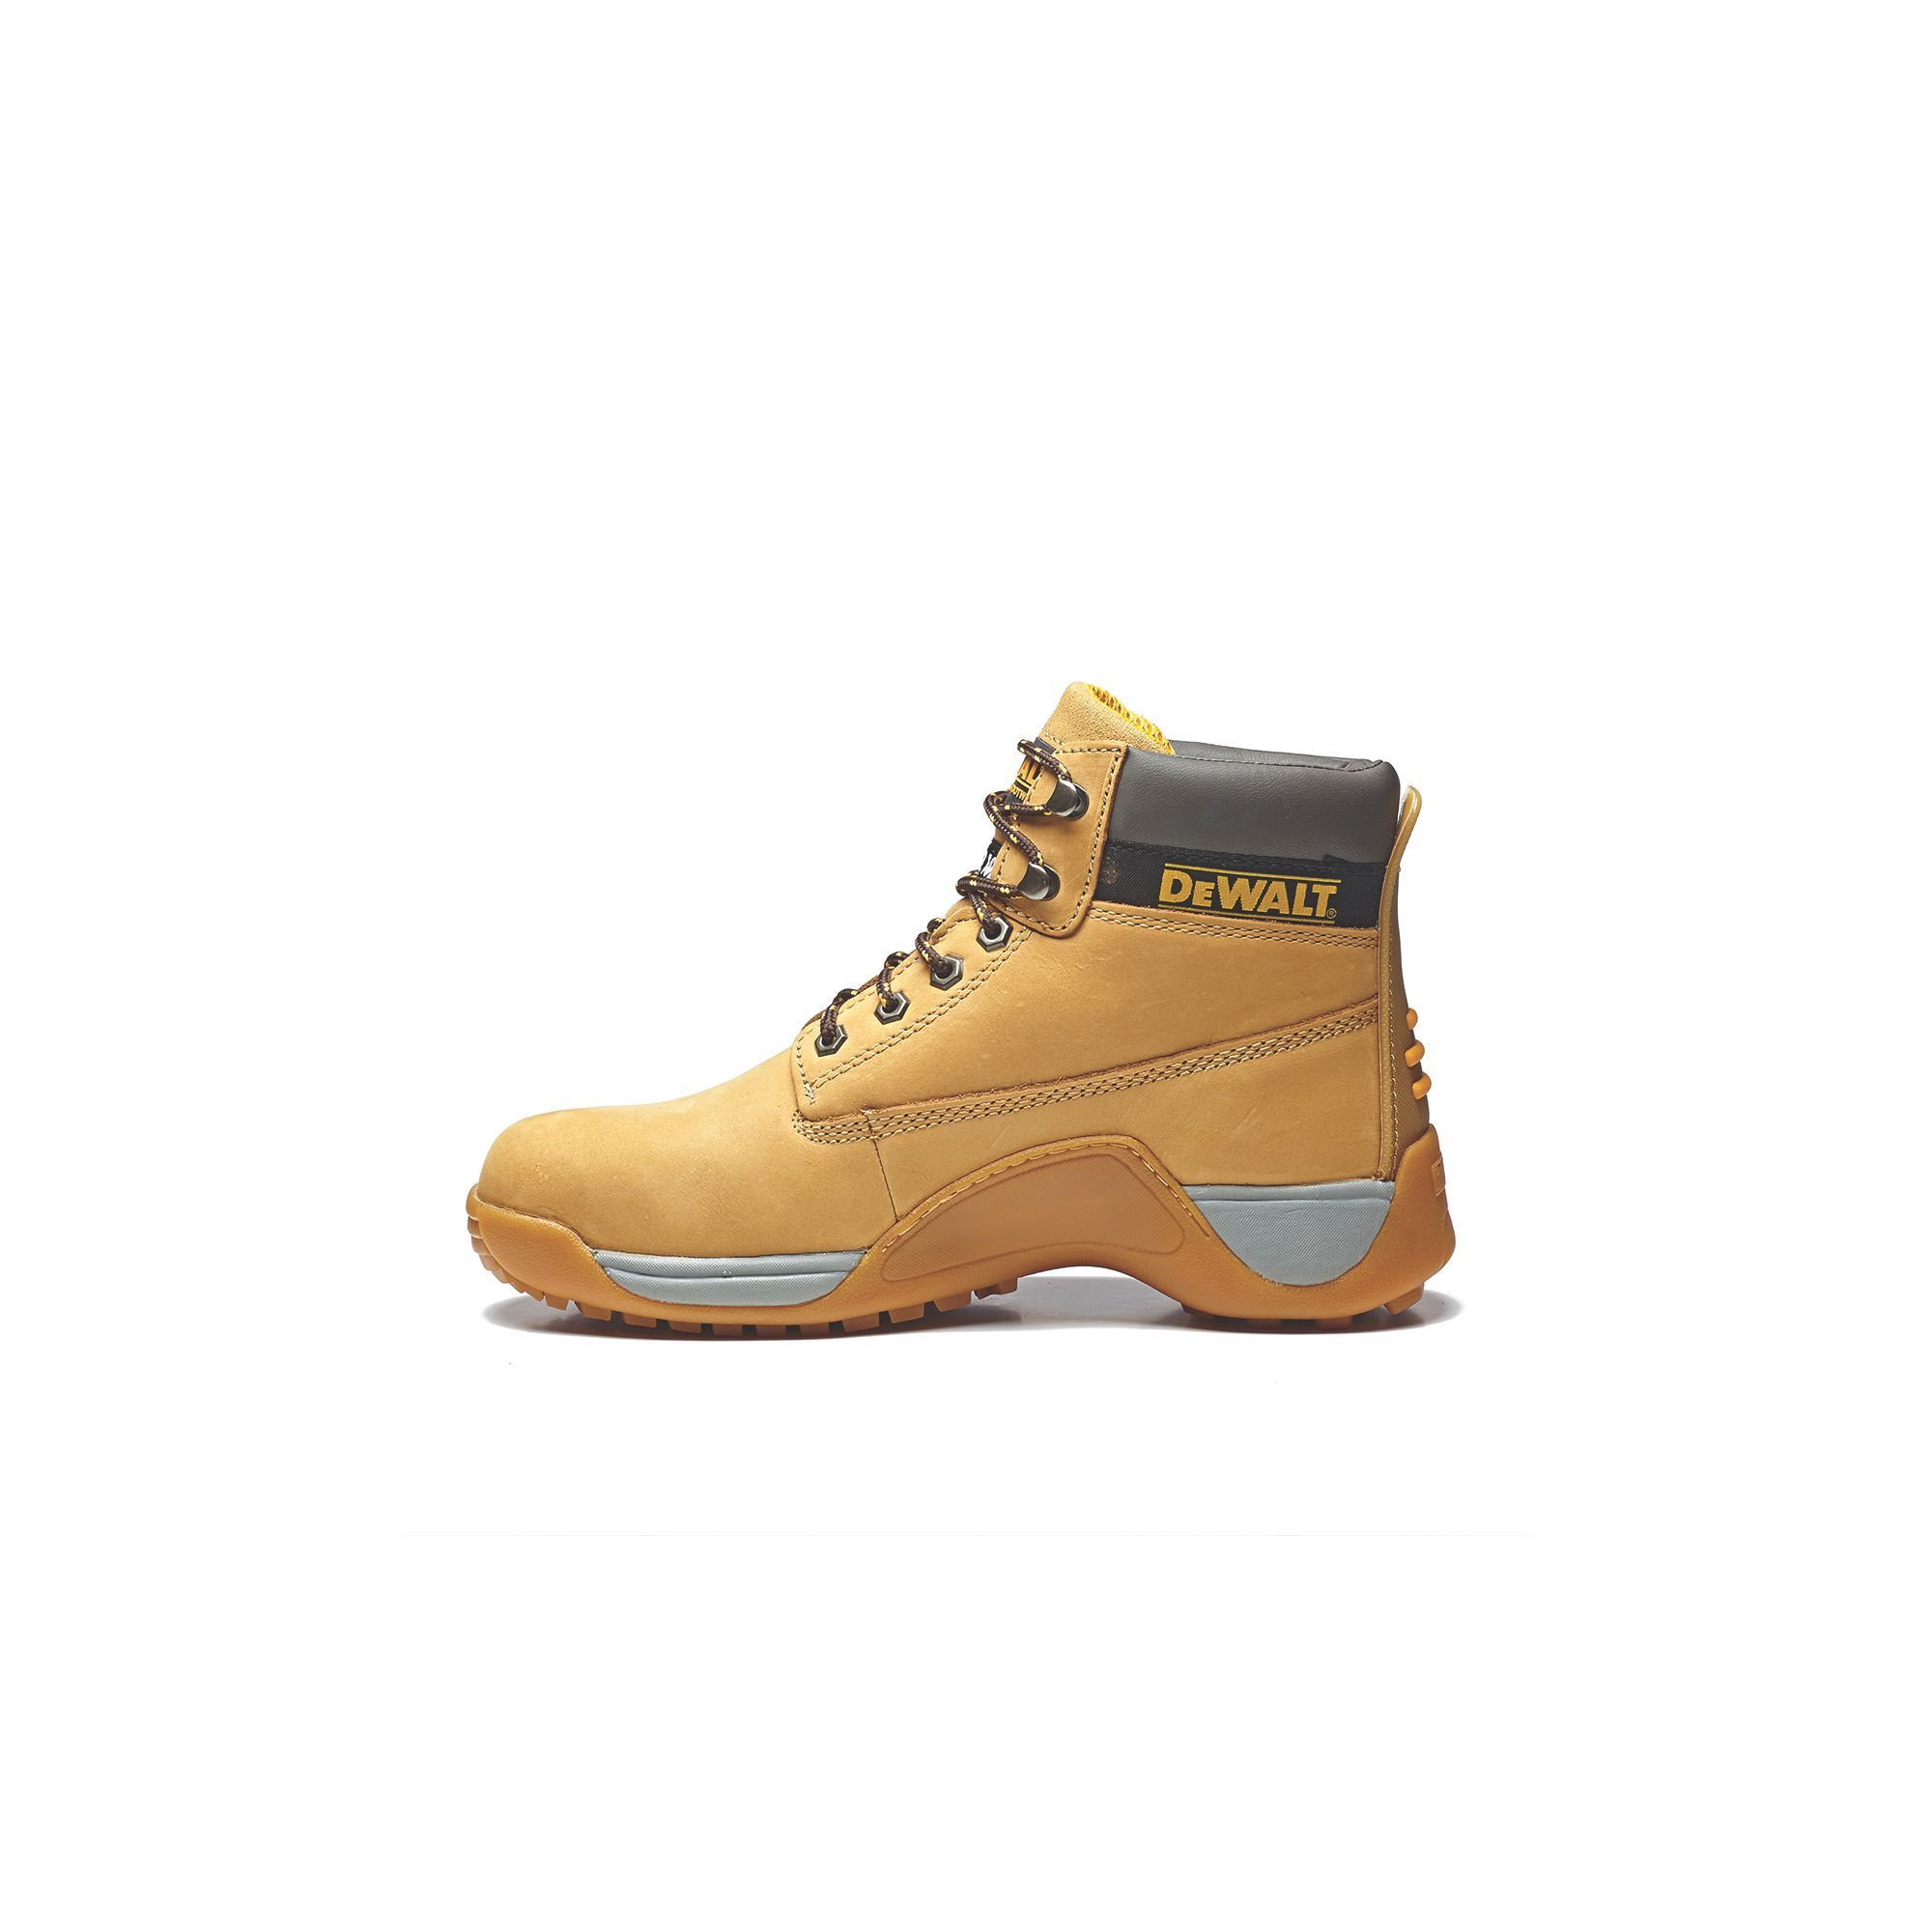 DeWalt Apprentice Men's Wheat Safety boots, Size 11